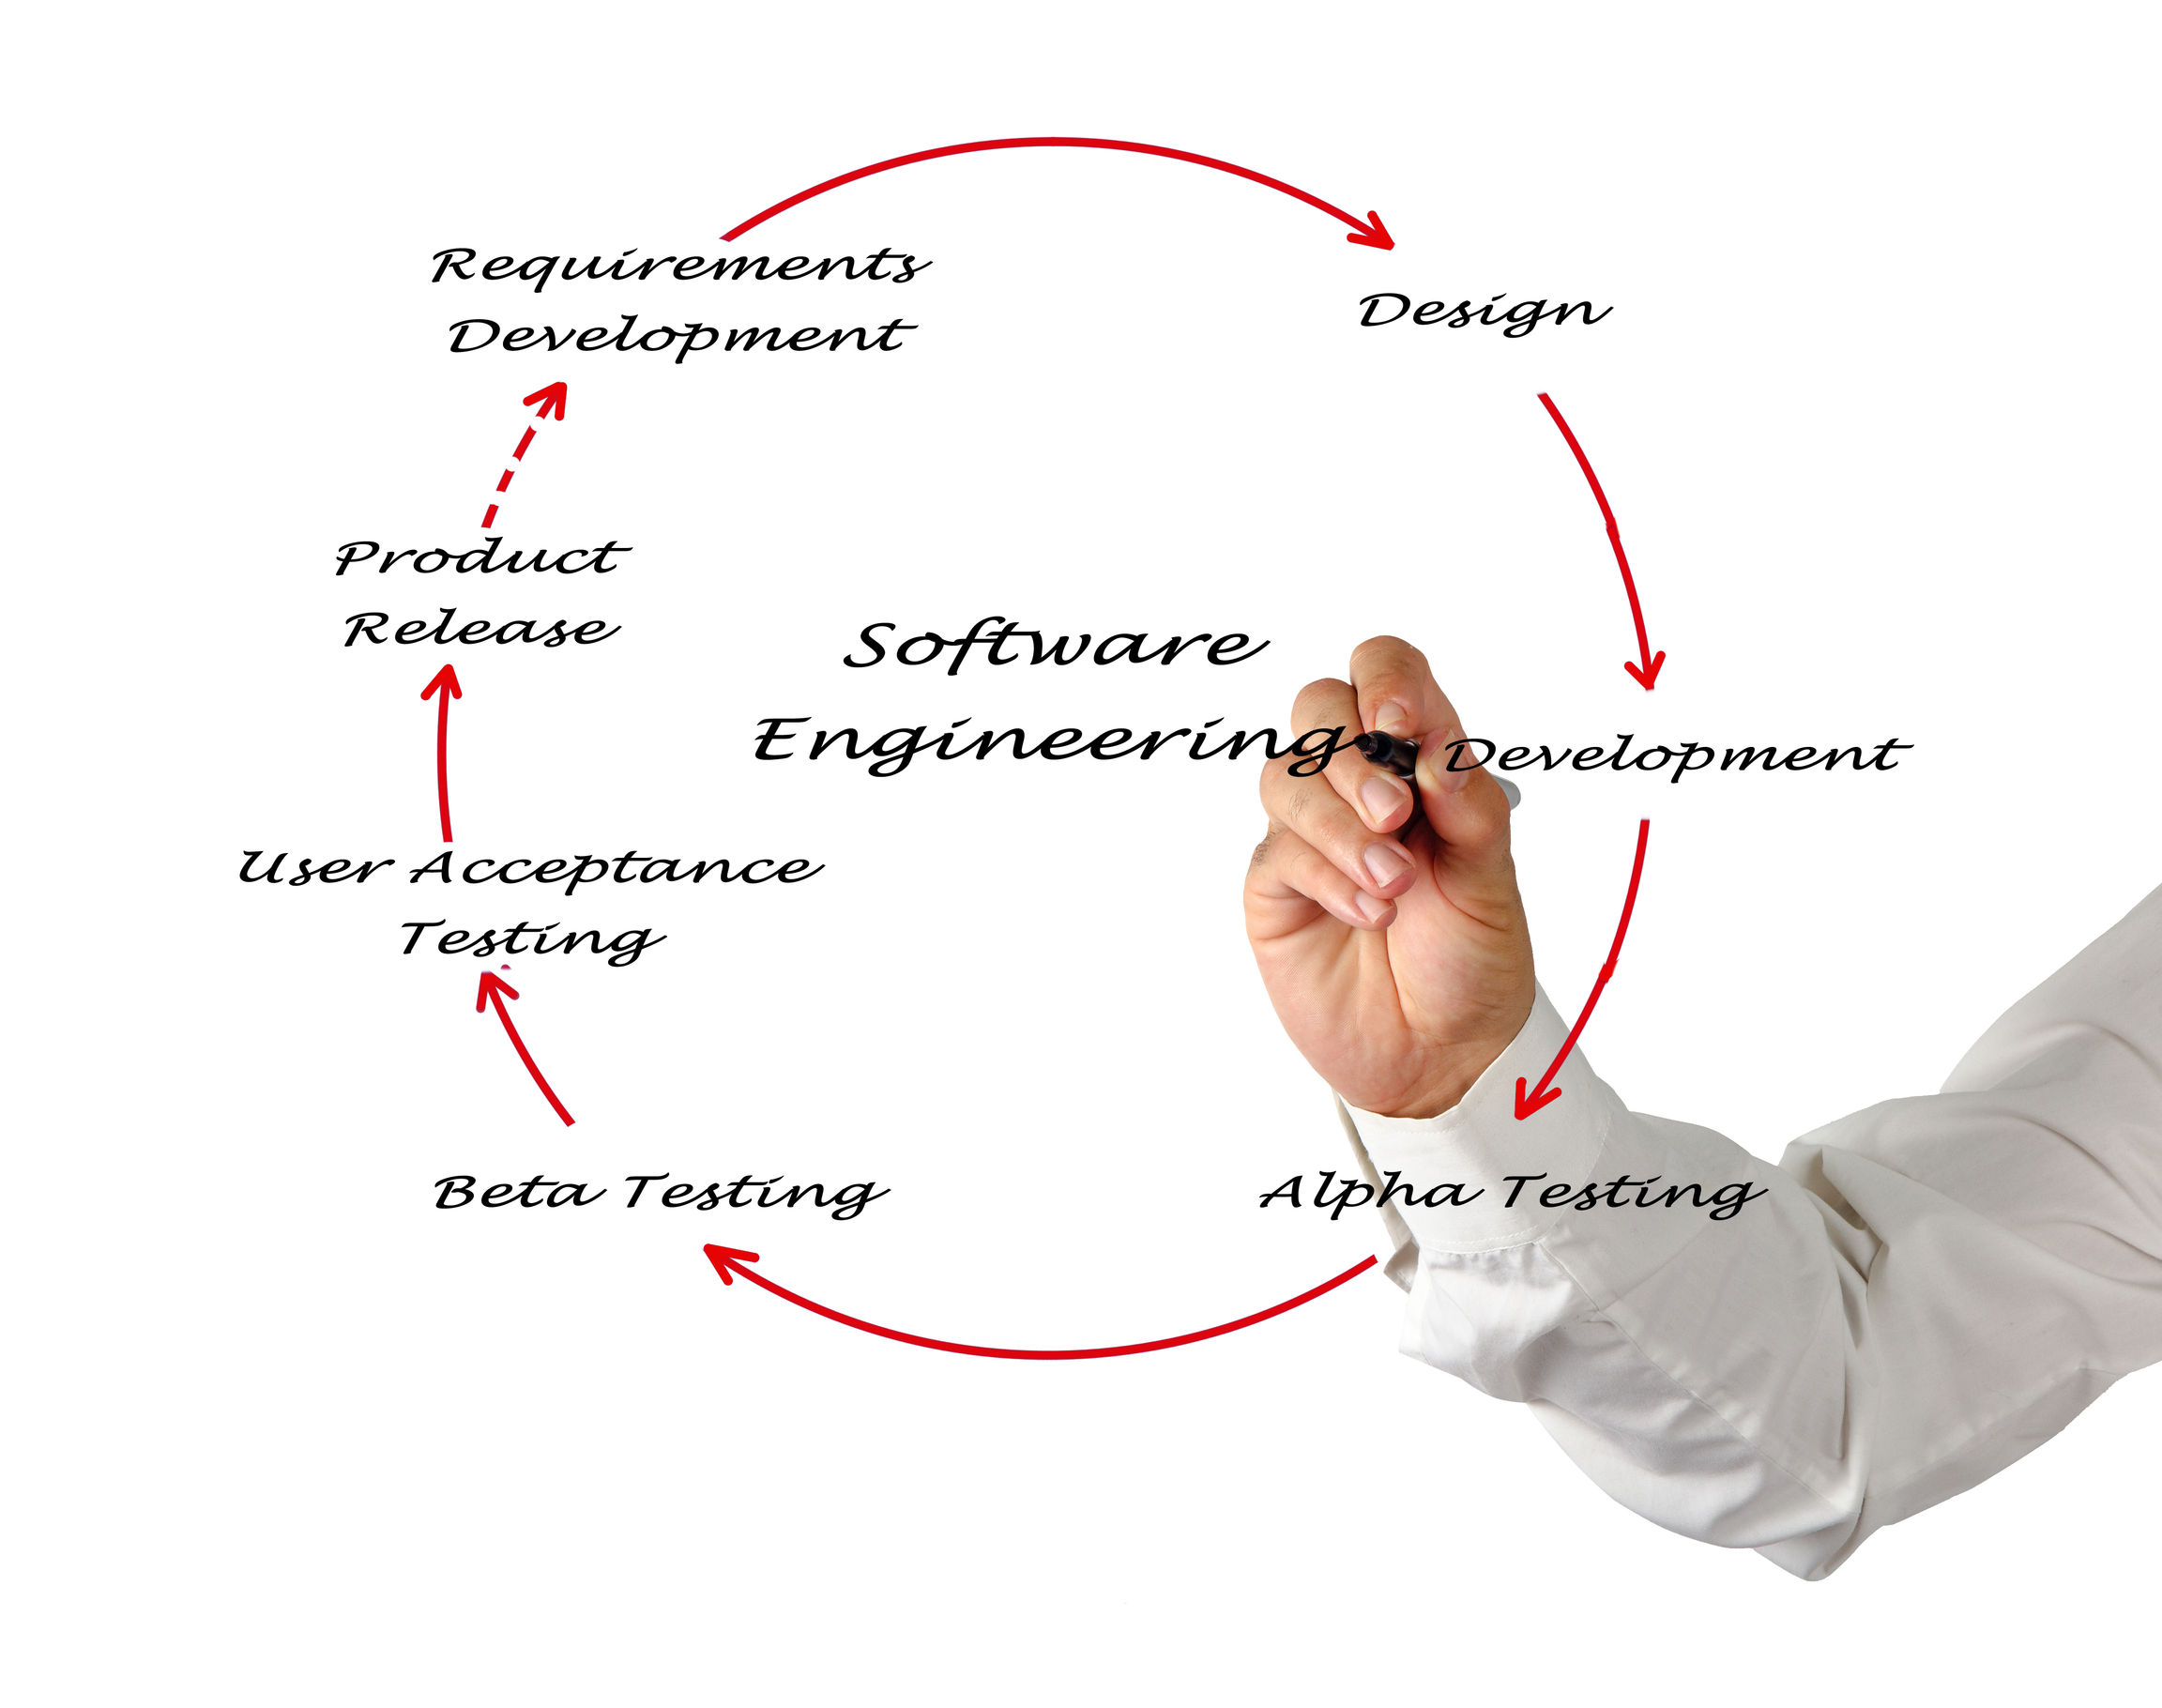 Custom software development services